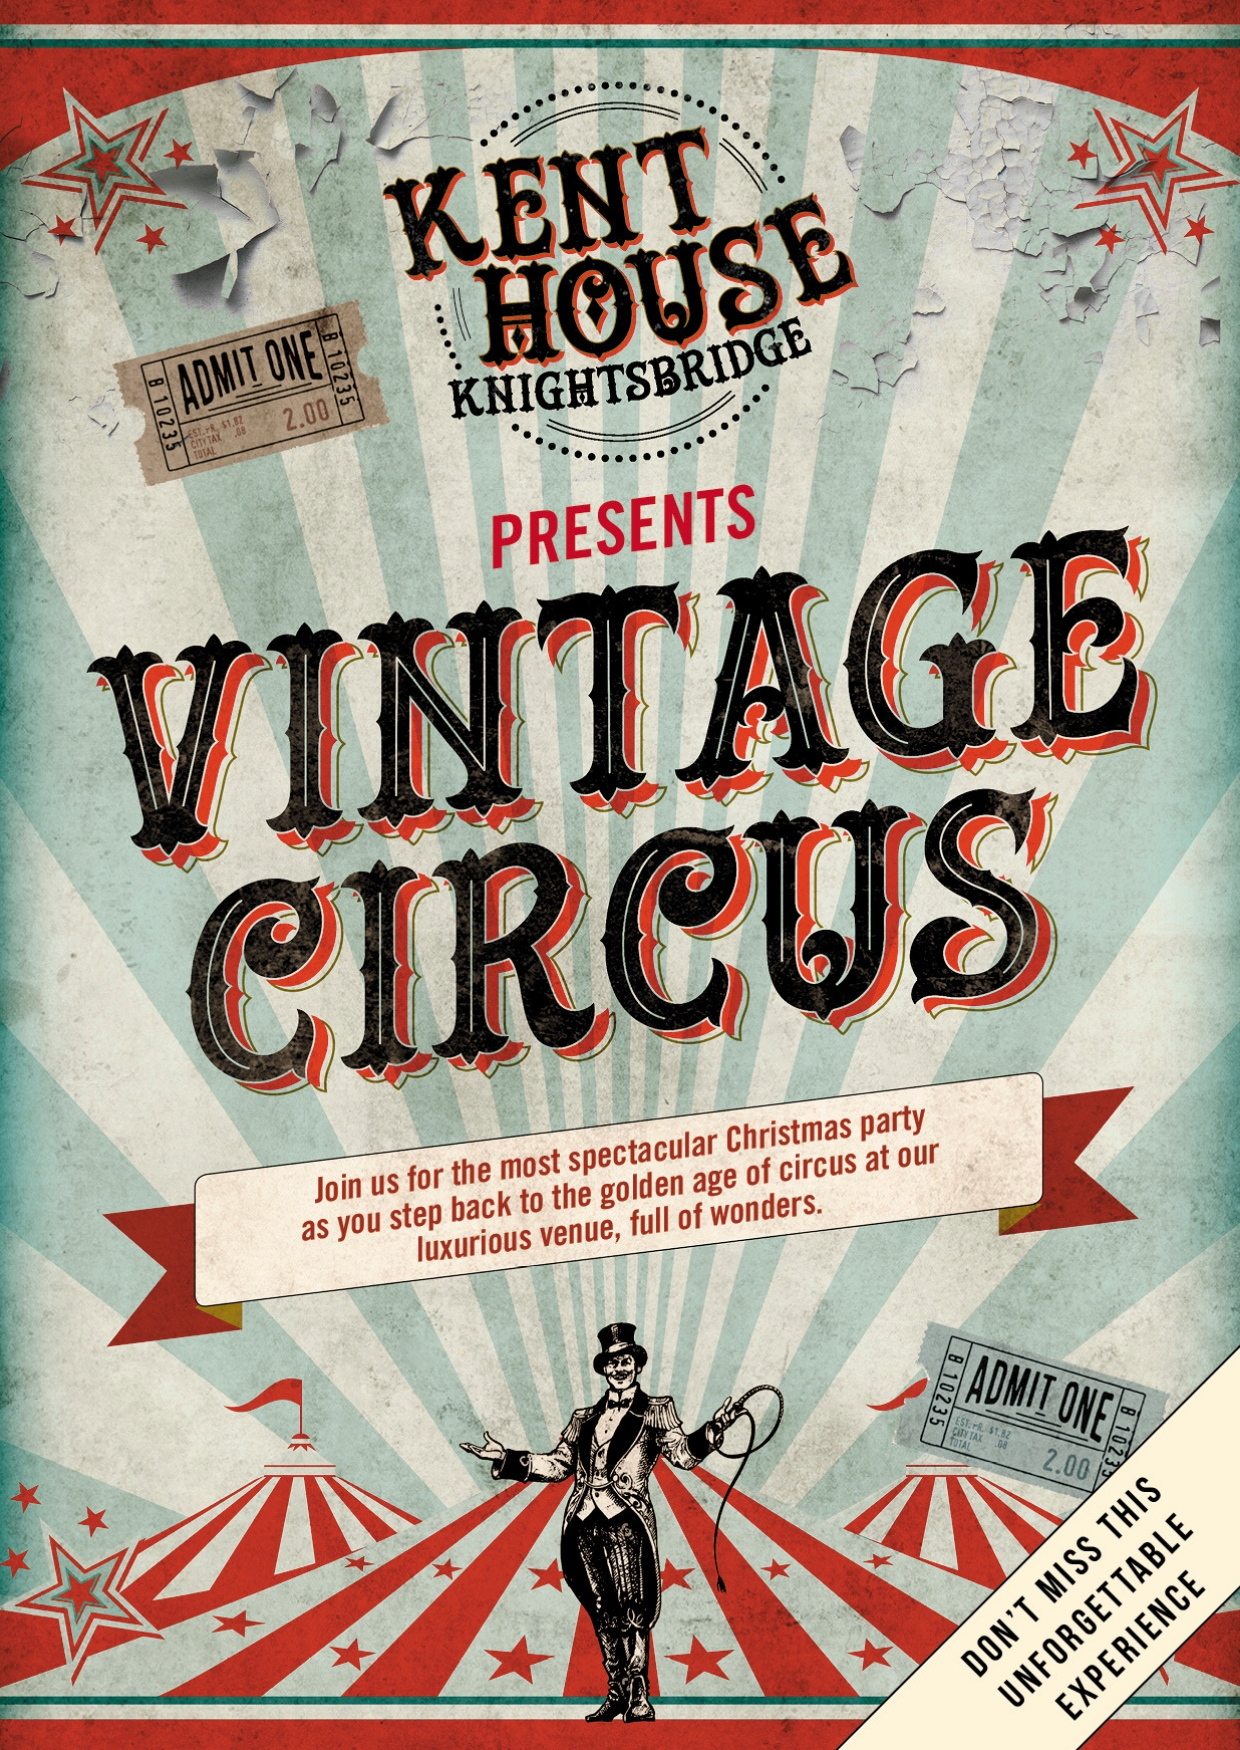 Vintage Circus Christmas Party Theme at Kent House Knightsbridge